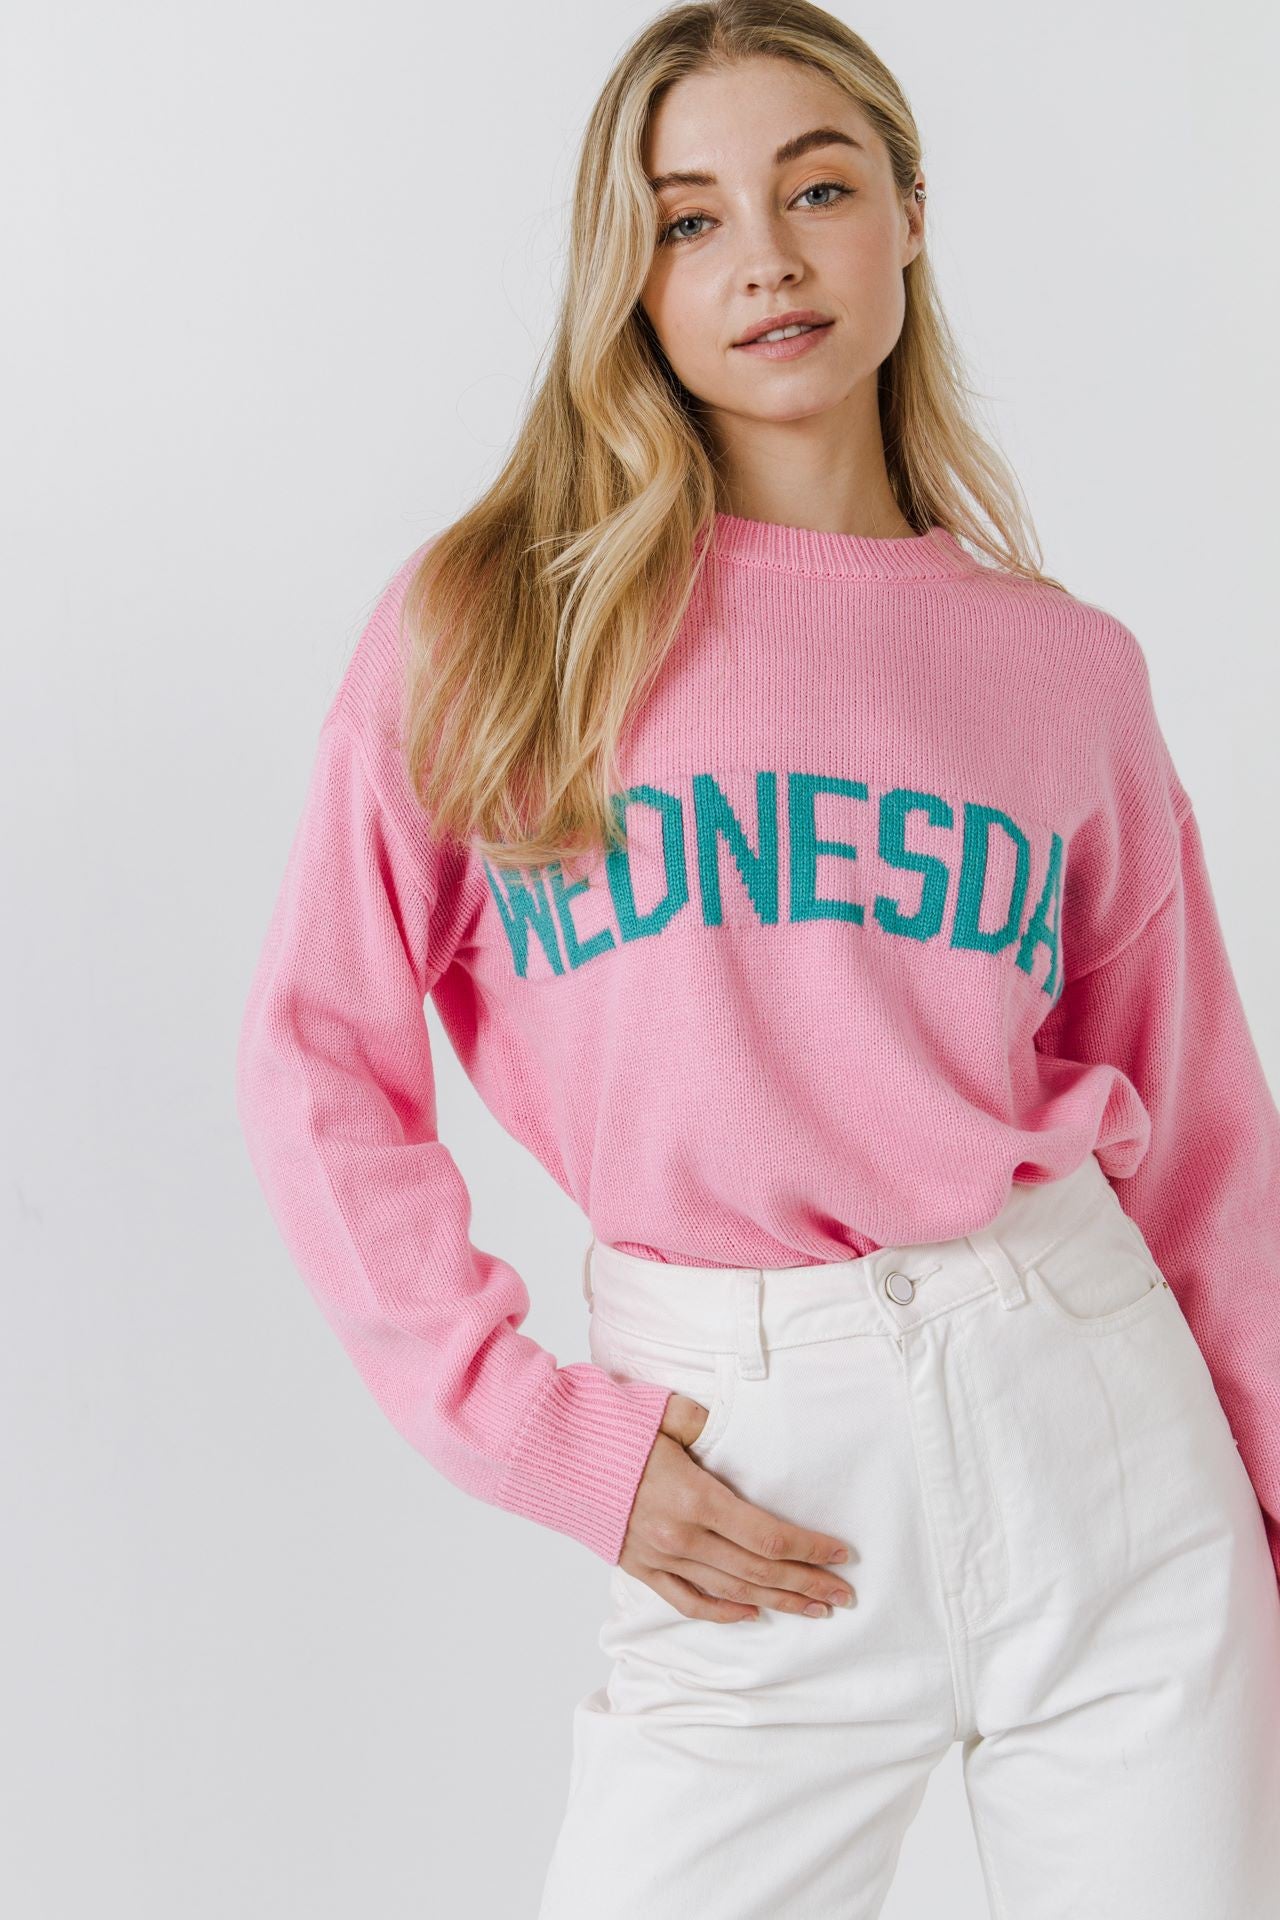 On Wednesdays We Wear Pink Sweater